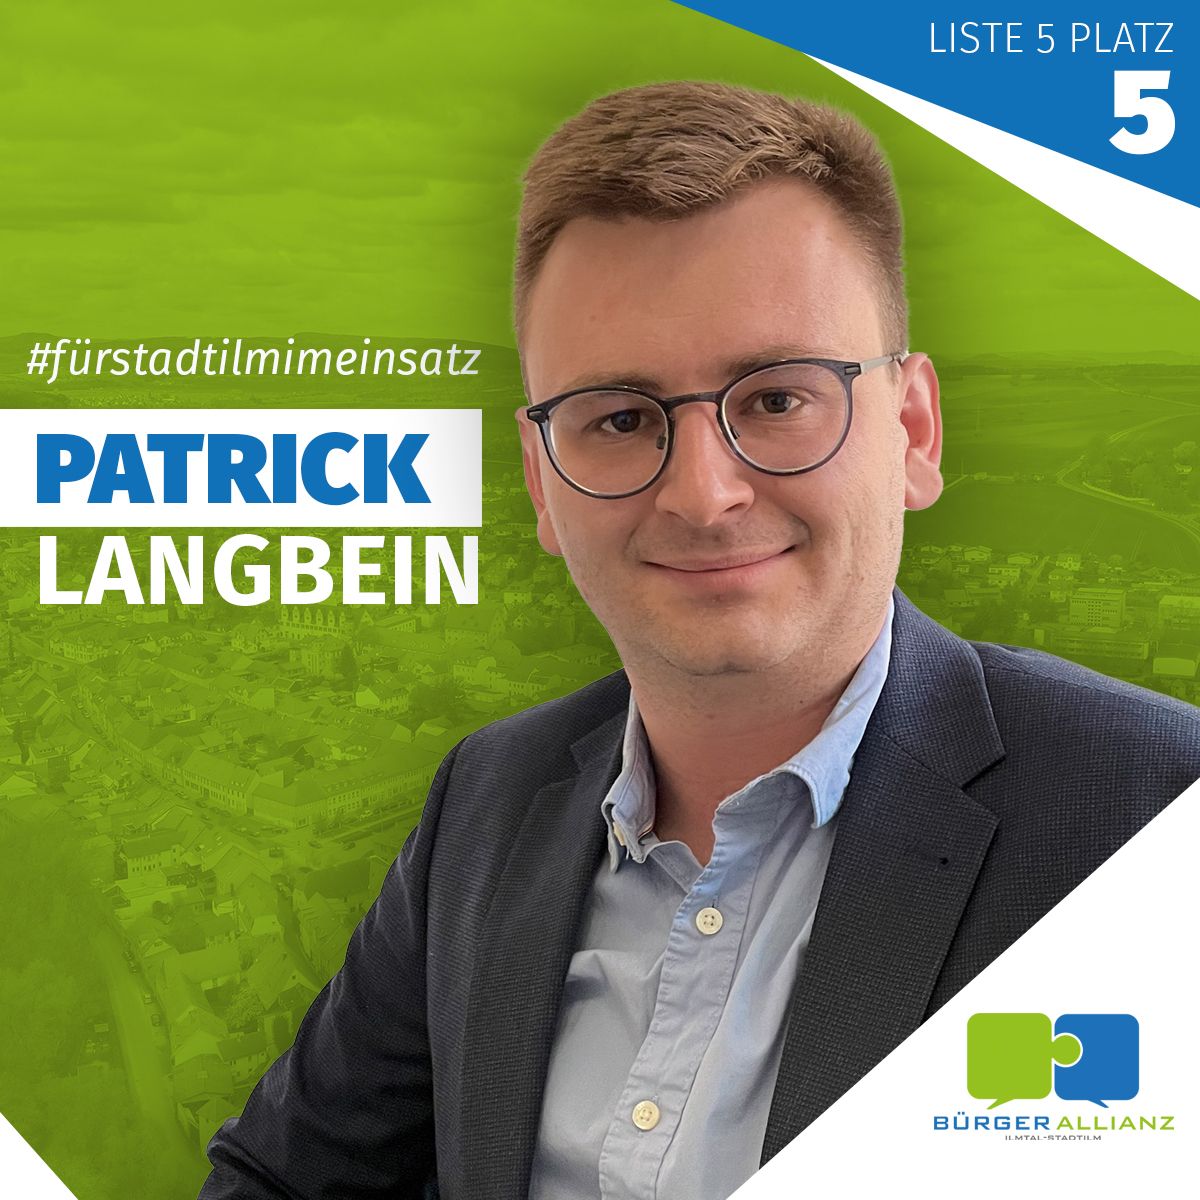 Patrick Langbein